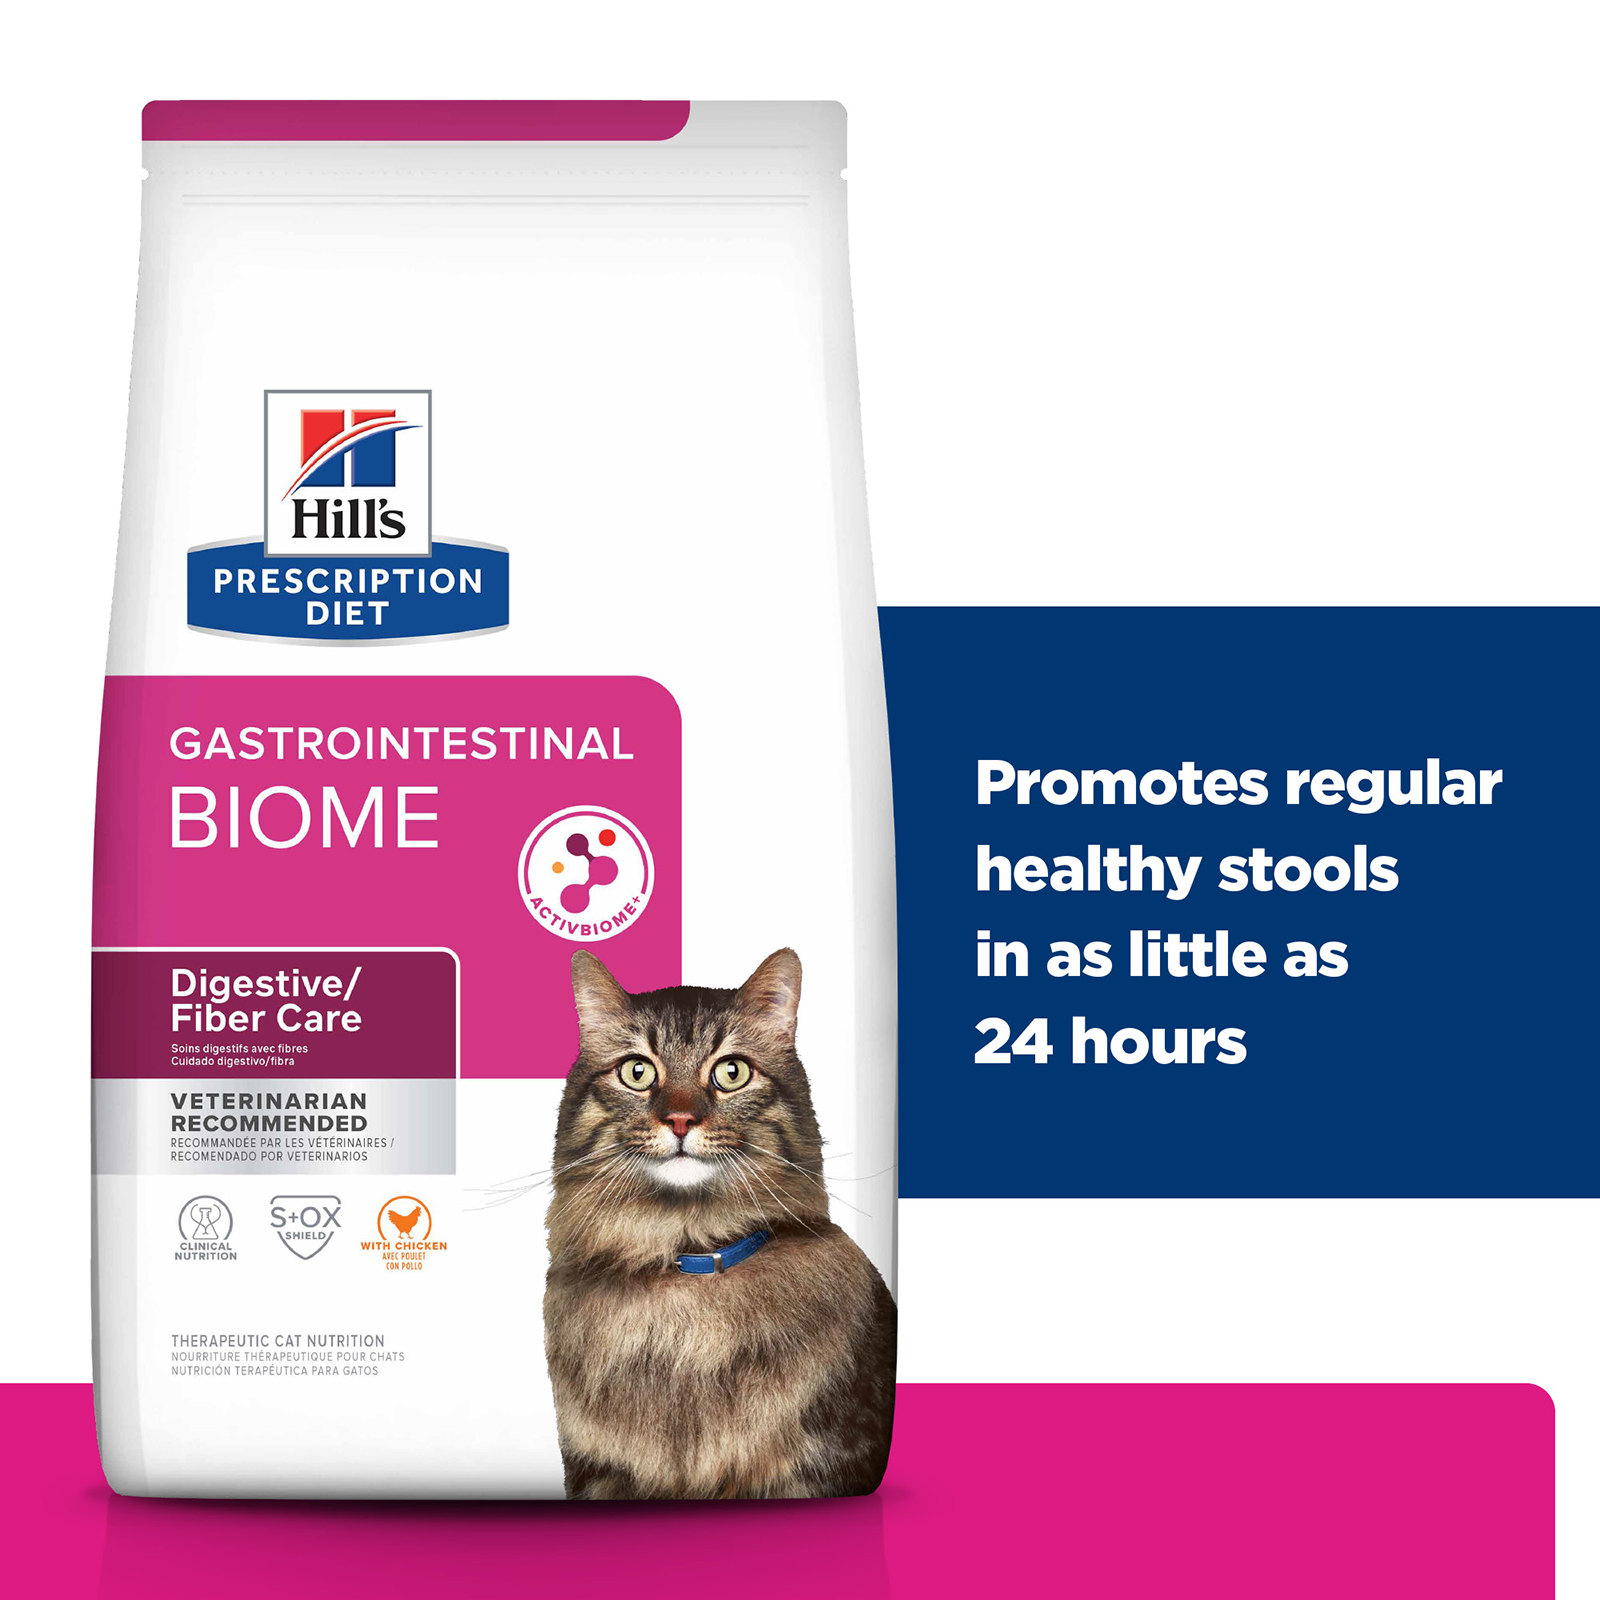 Hill's Prescription Diet Cat Food Gastrointestinal Biome Digestive/Fibre Care with Chicken